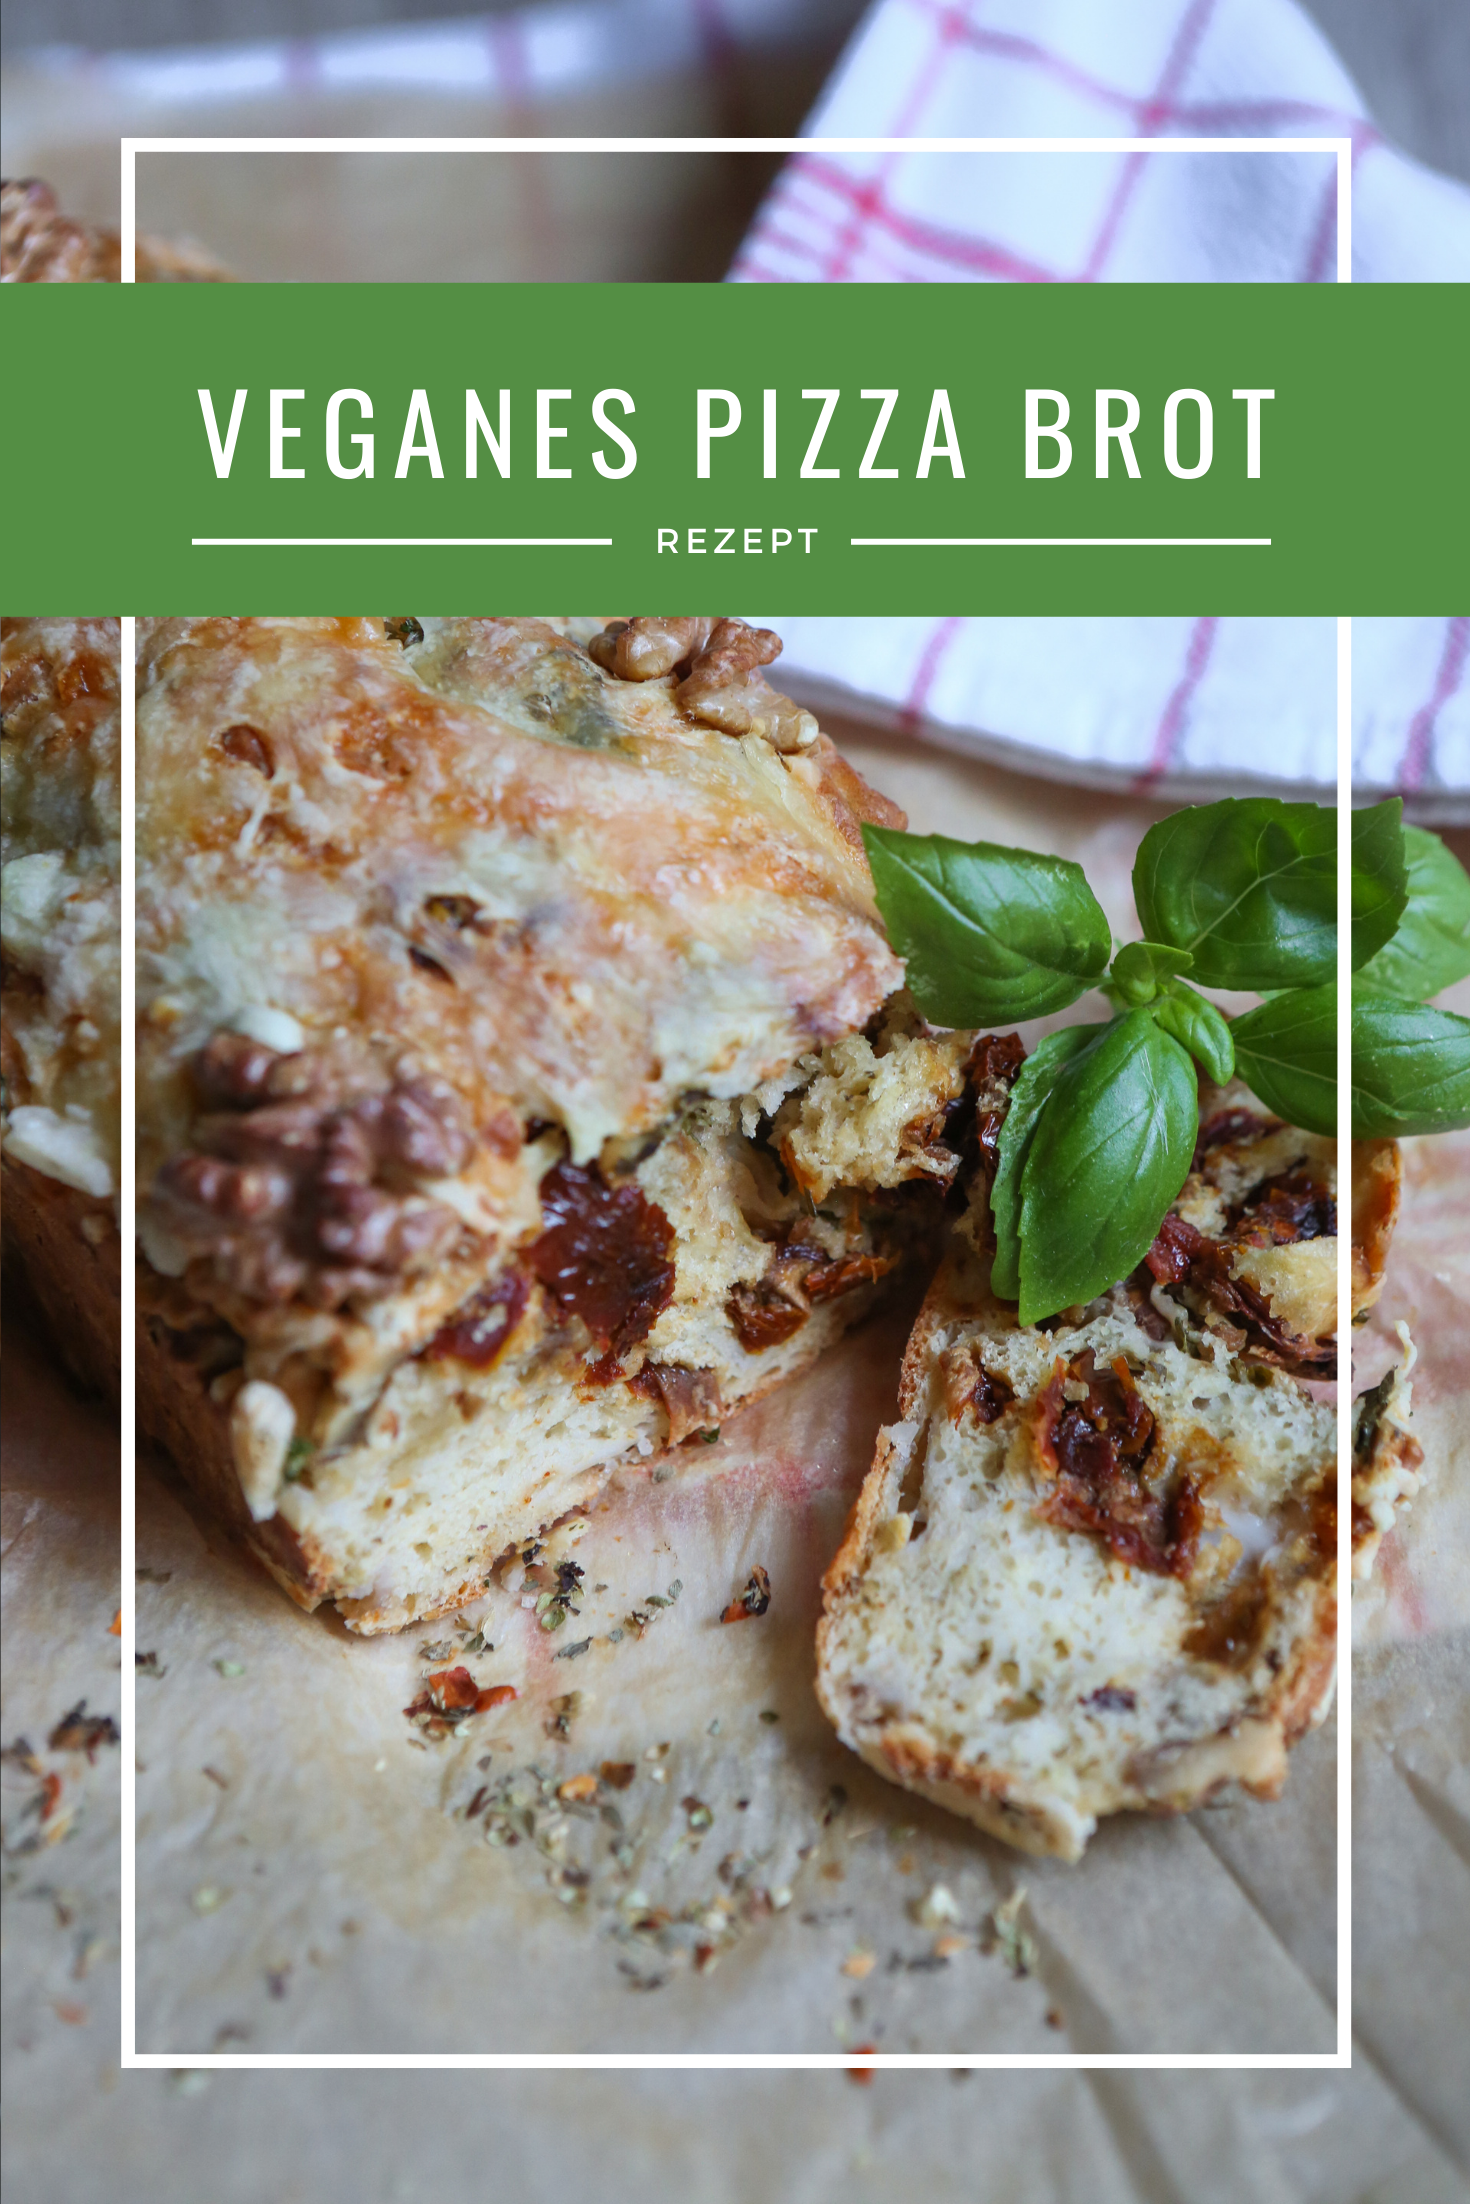 vegan-vegan bread-veganes brot-pizzabrot-feta brot-party brot-vegane rezepte-gesund backen-lauralamode-foodblog-berlin